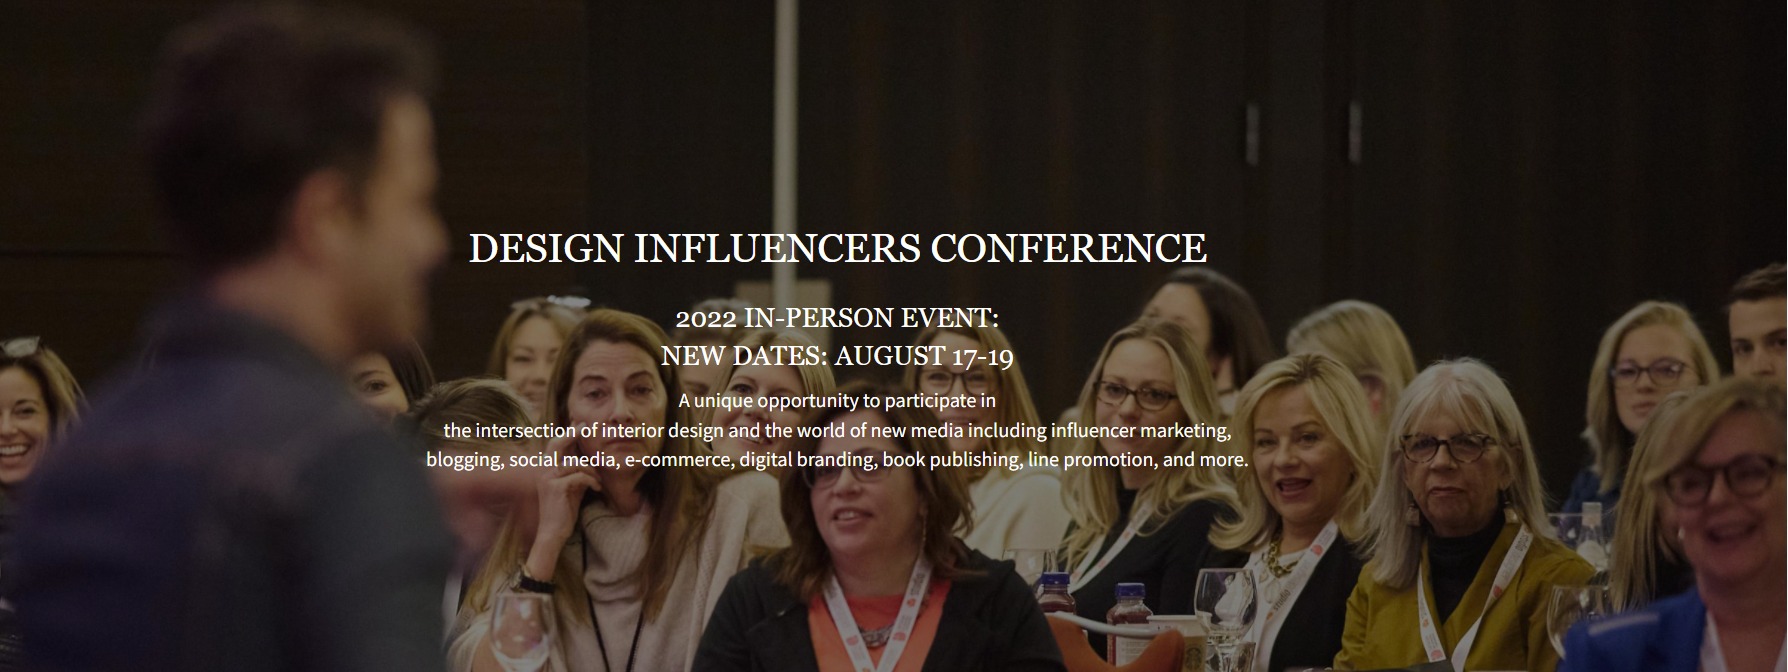 Design Influencers Conference 2022